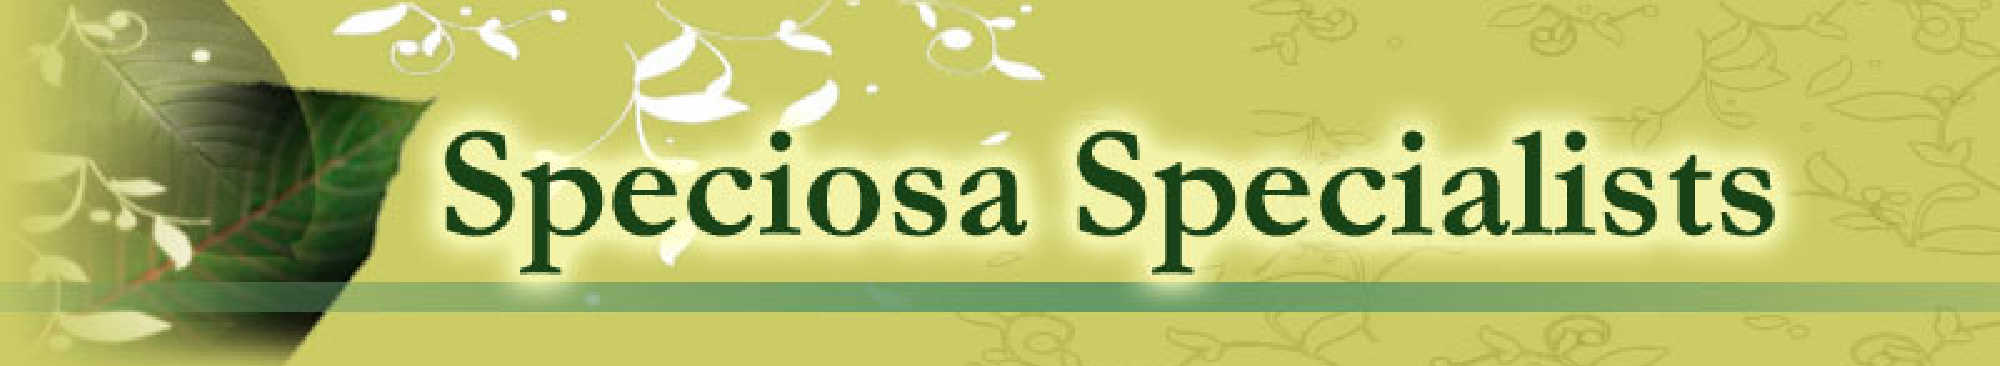 image of speciosa specialists logo